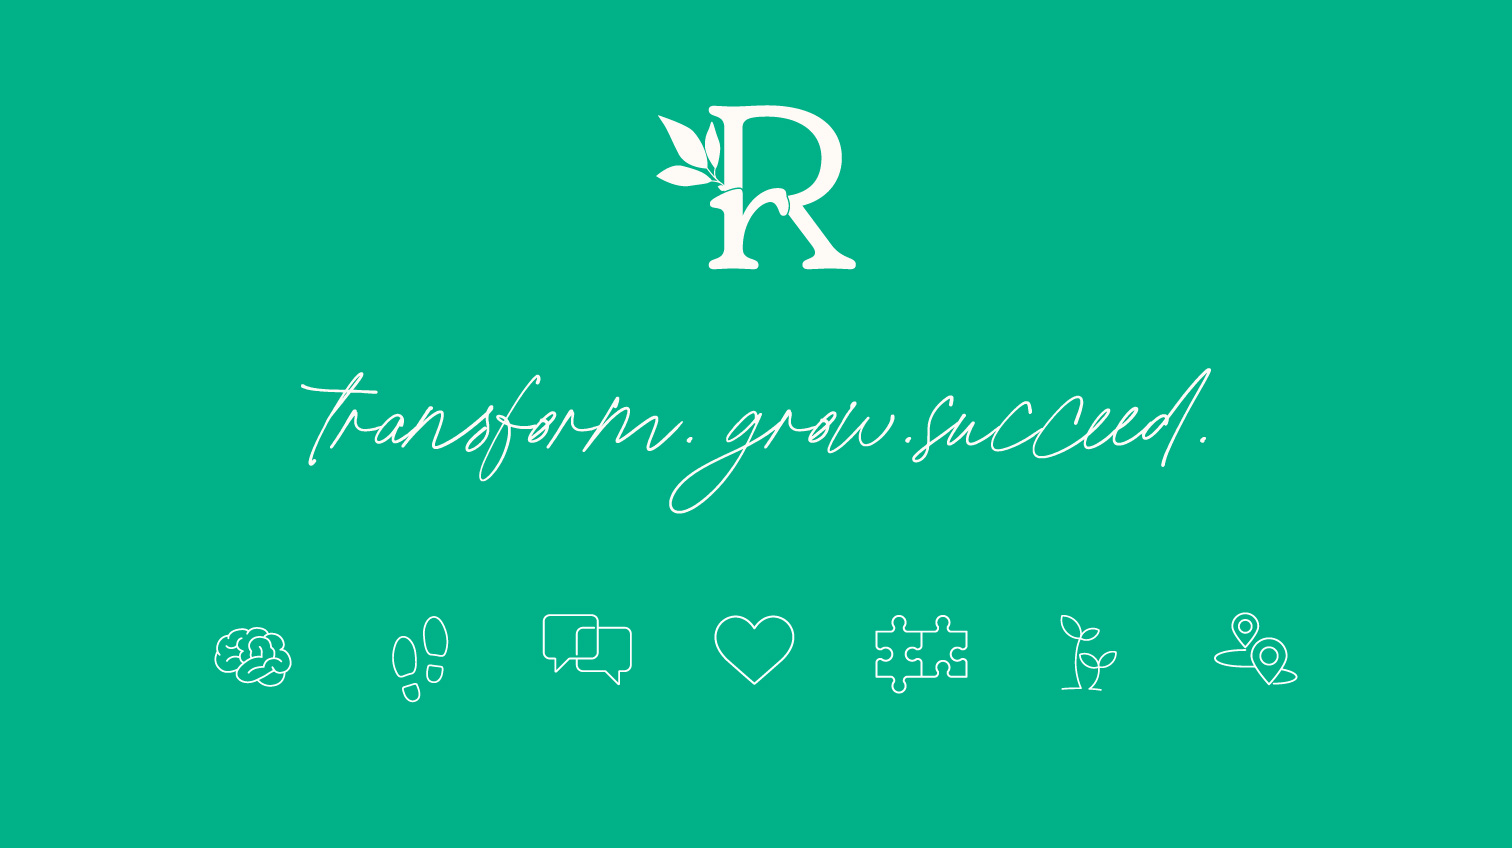 RRN (Results Right Now) branding, logo, handwritten motto 